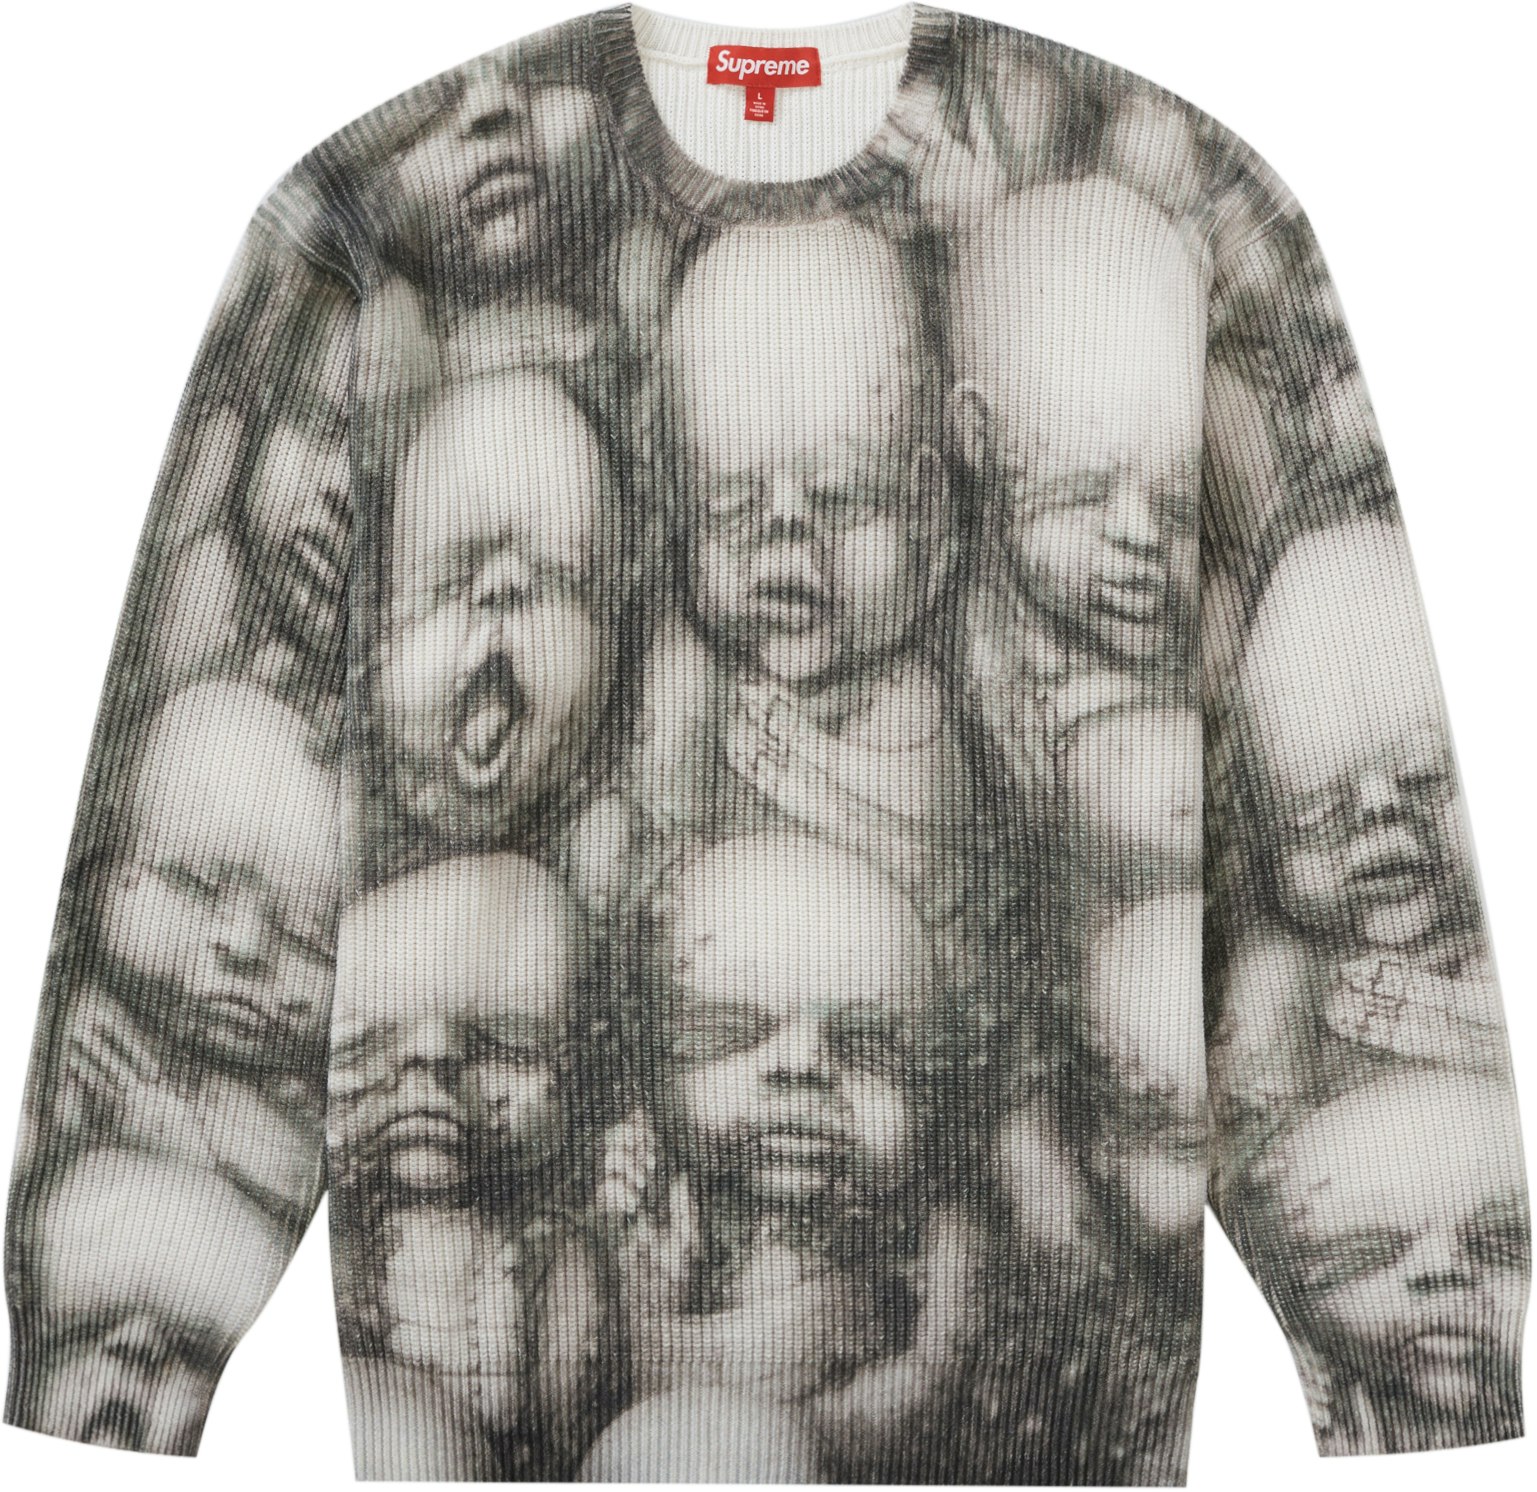 Supreme H.R. Giger Sweater今だけ特別値引きです！！！